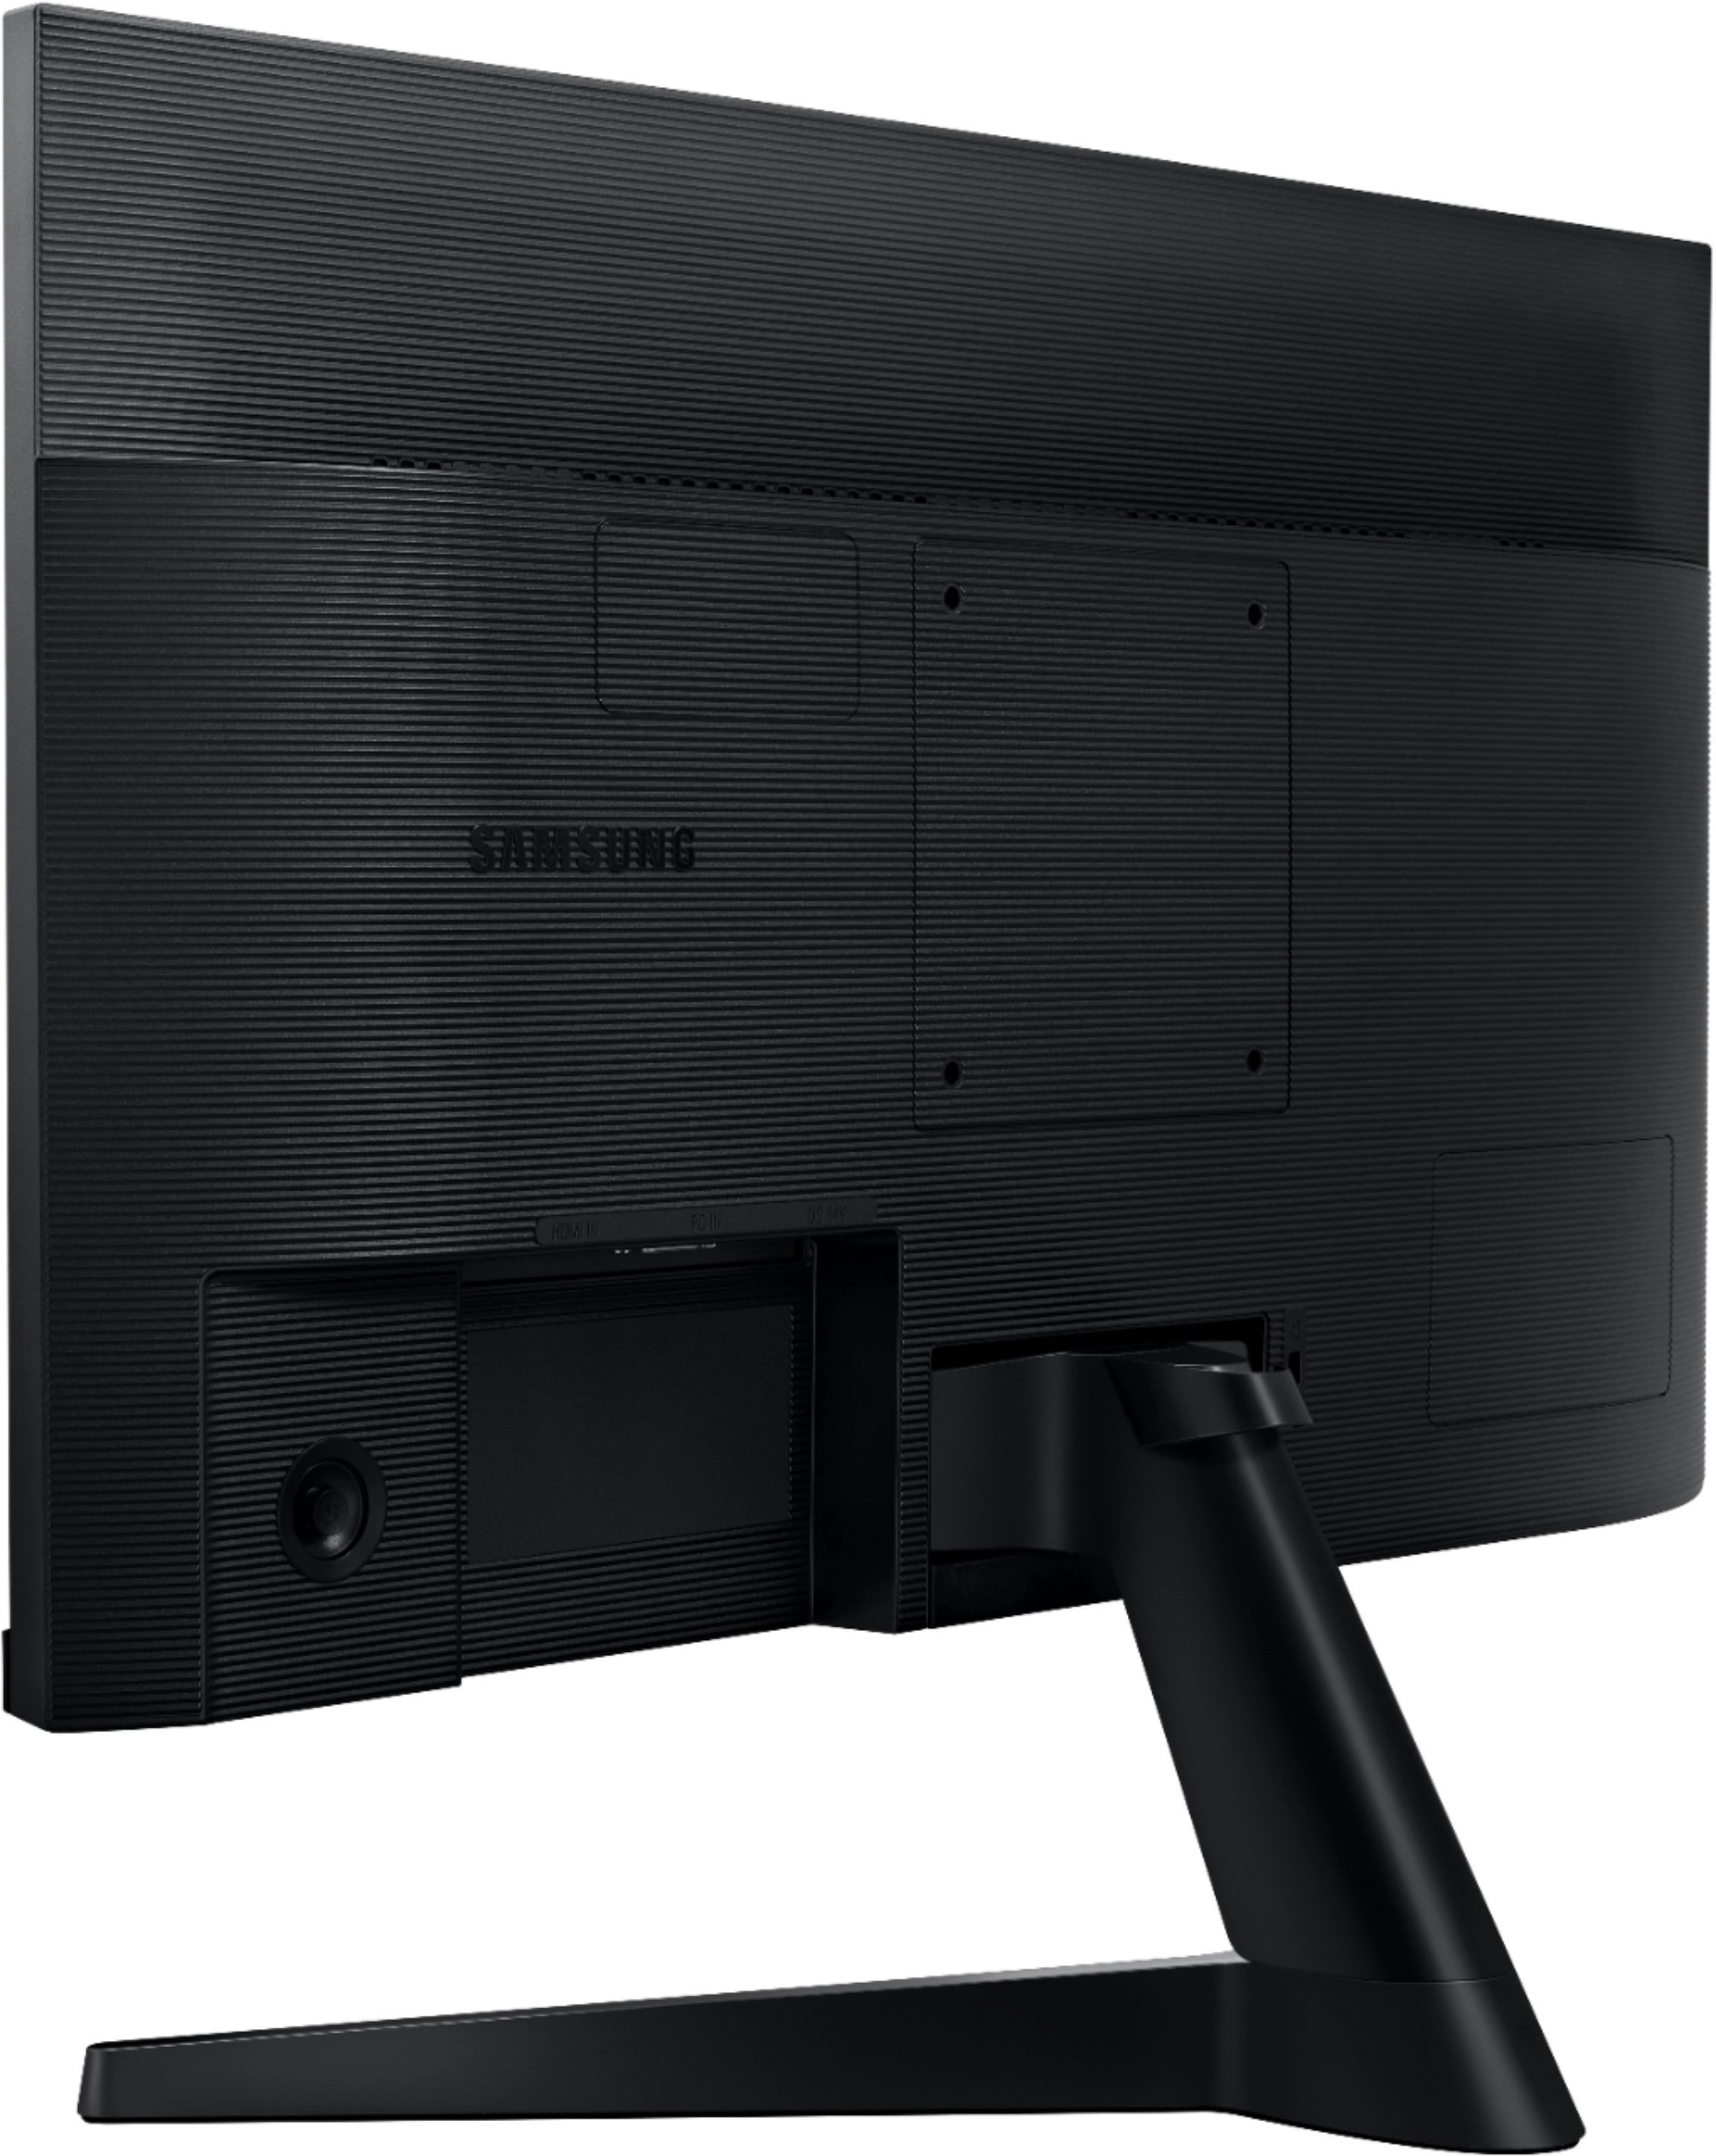 Monitor TV Samsung 24 pulgadas LED en PlanetOffice